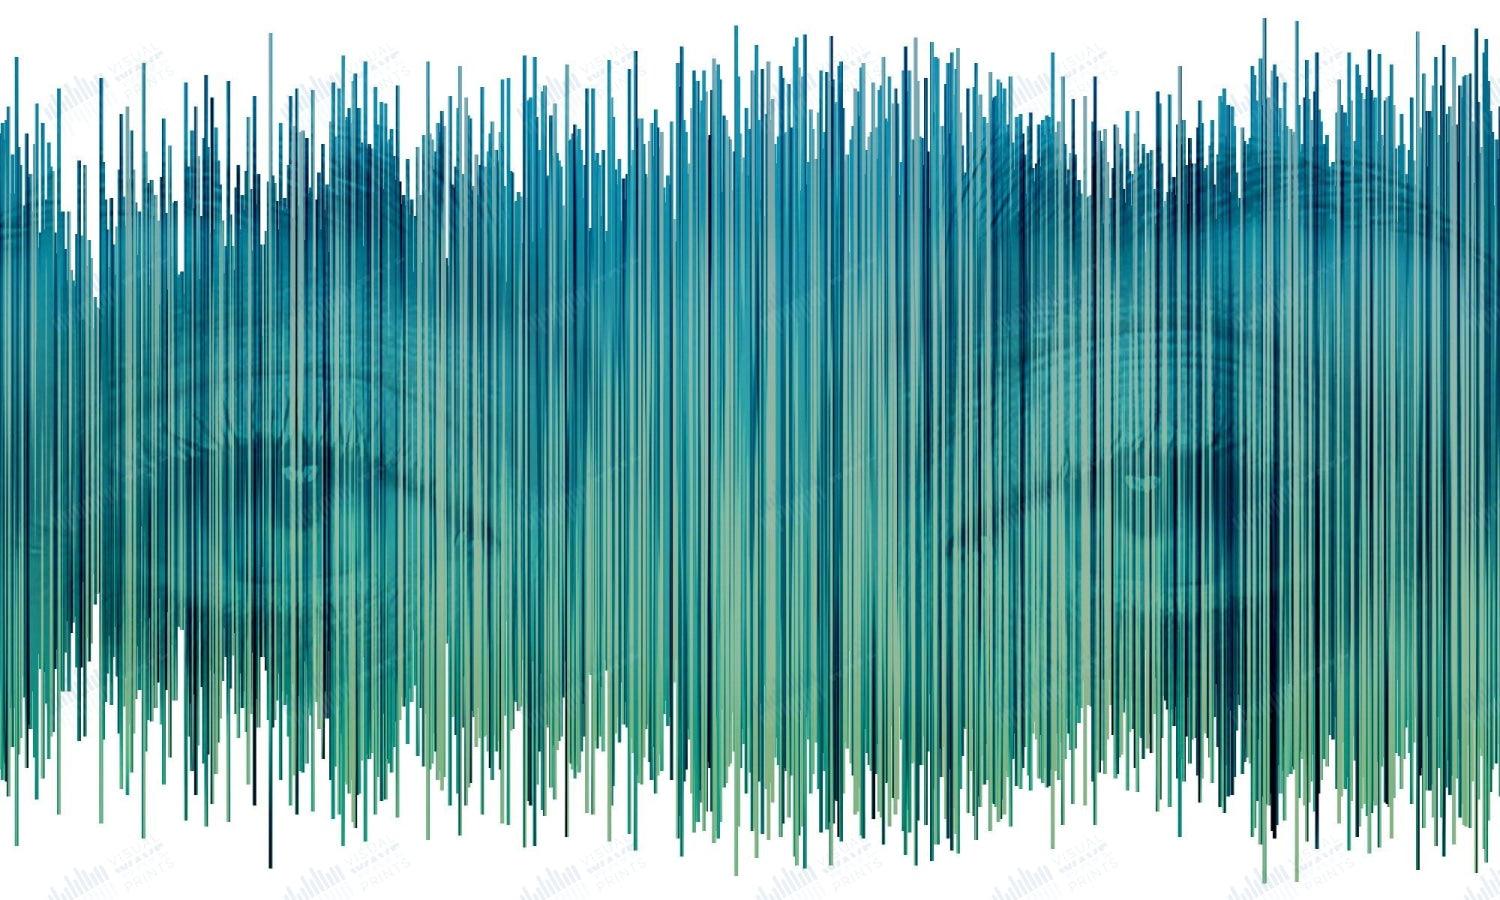 Criminal by Fiona Apple - Visual Wave Prints